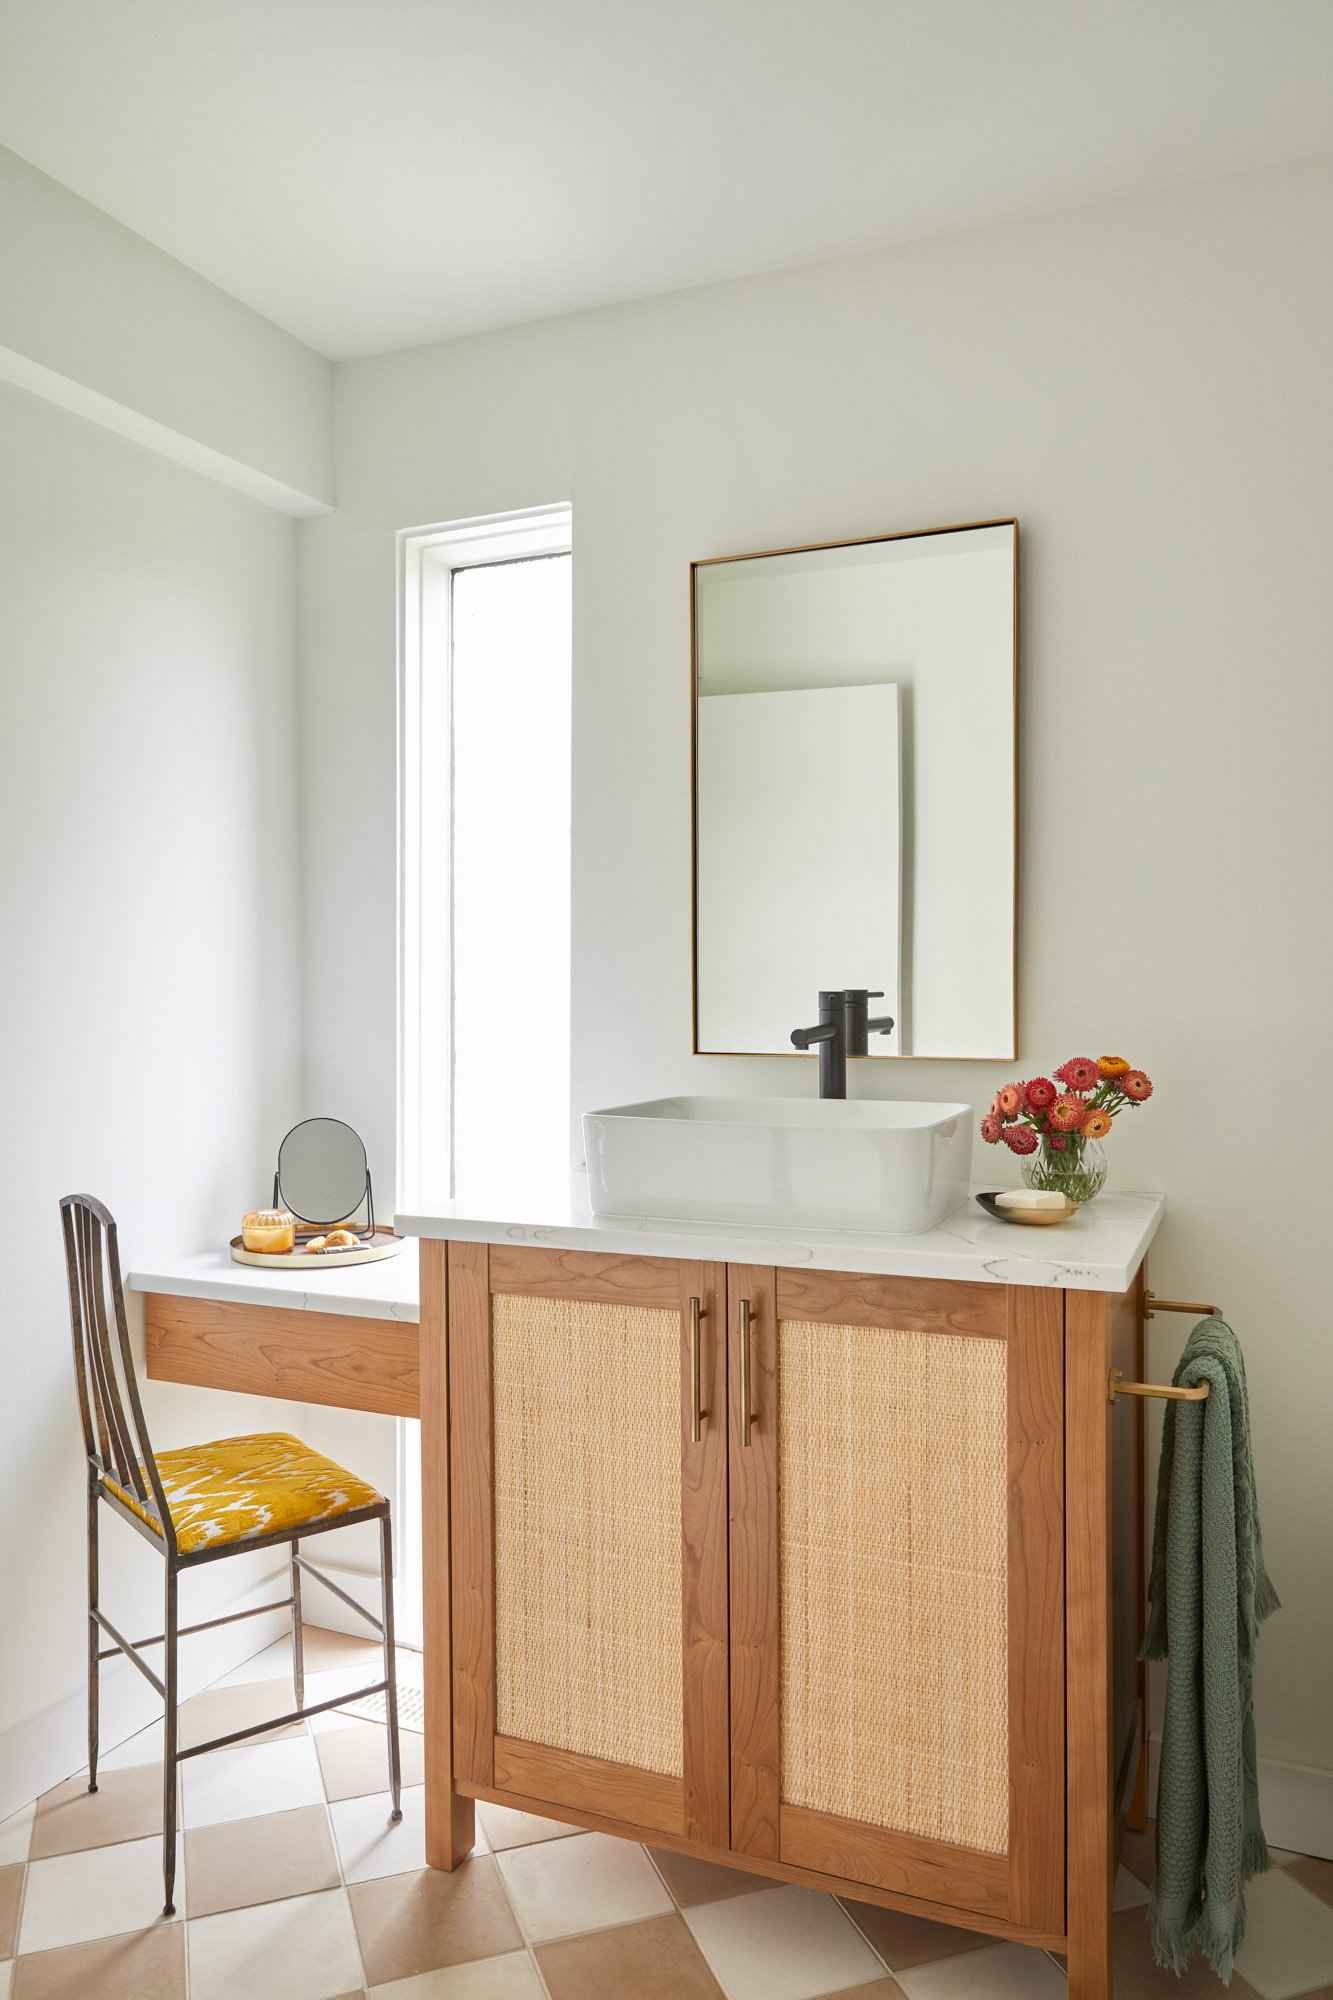 Valerie_Morisset_Interior_Design_Bathroom Vanity_Montreal_Quebec_Canada_Senneville_21034_LR.jpg